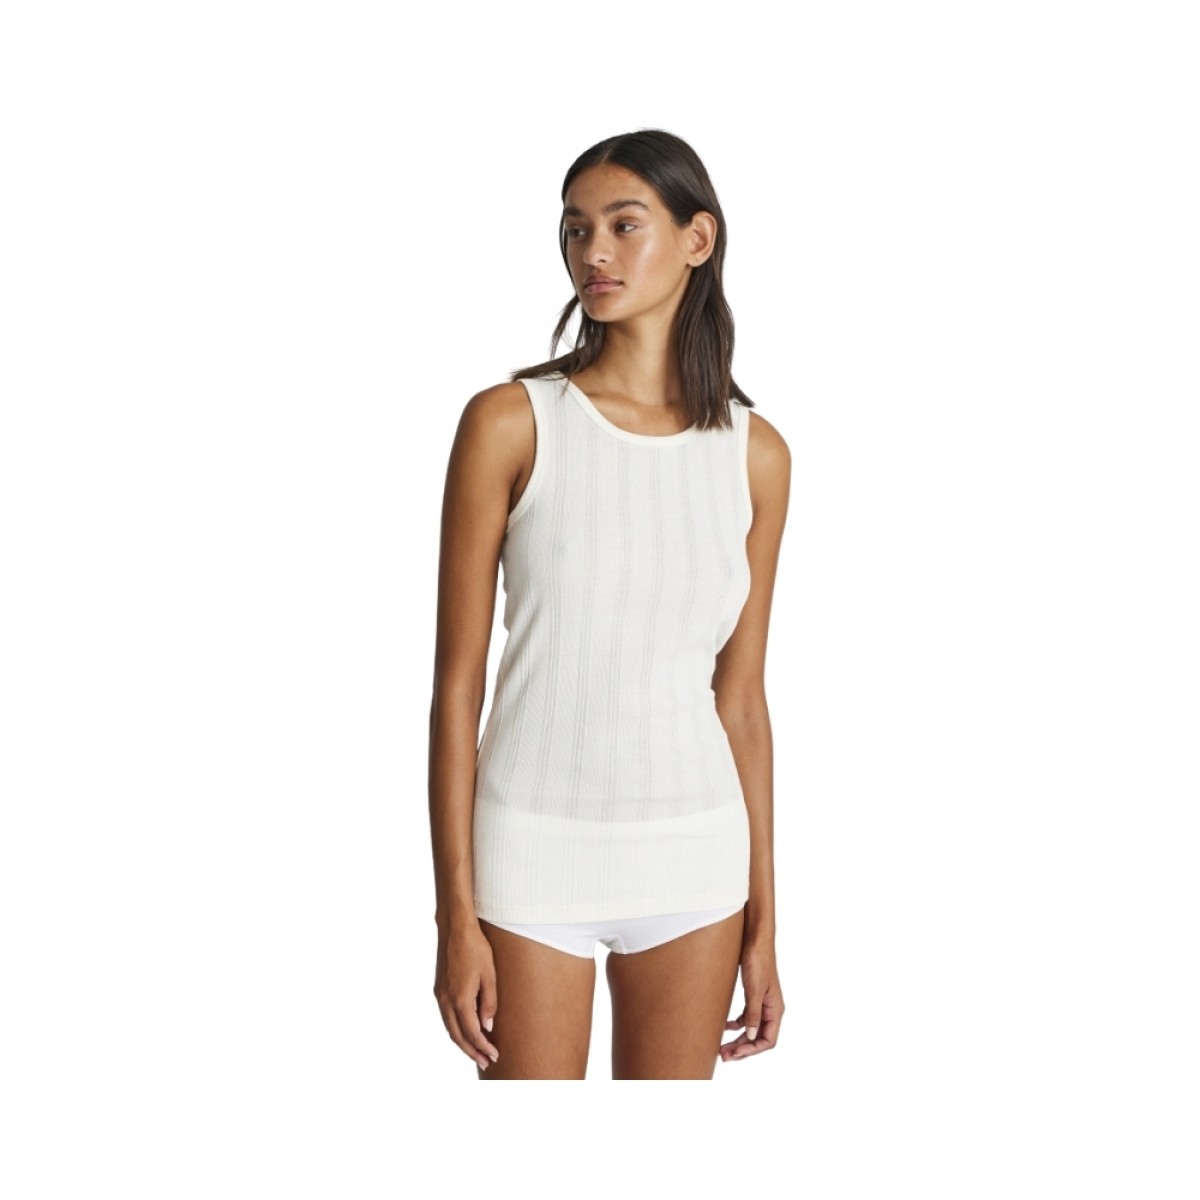 alberte cotton top - off white - model look